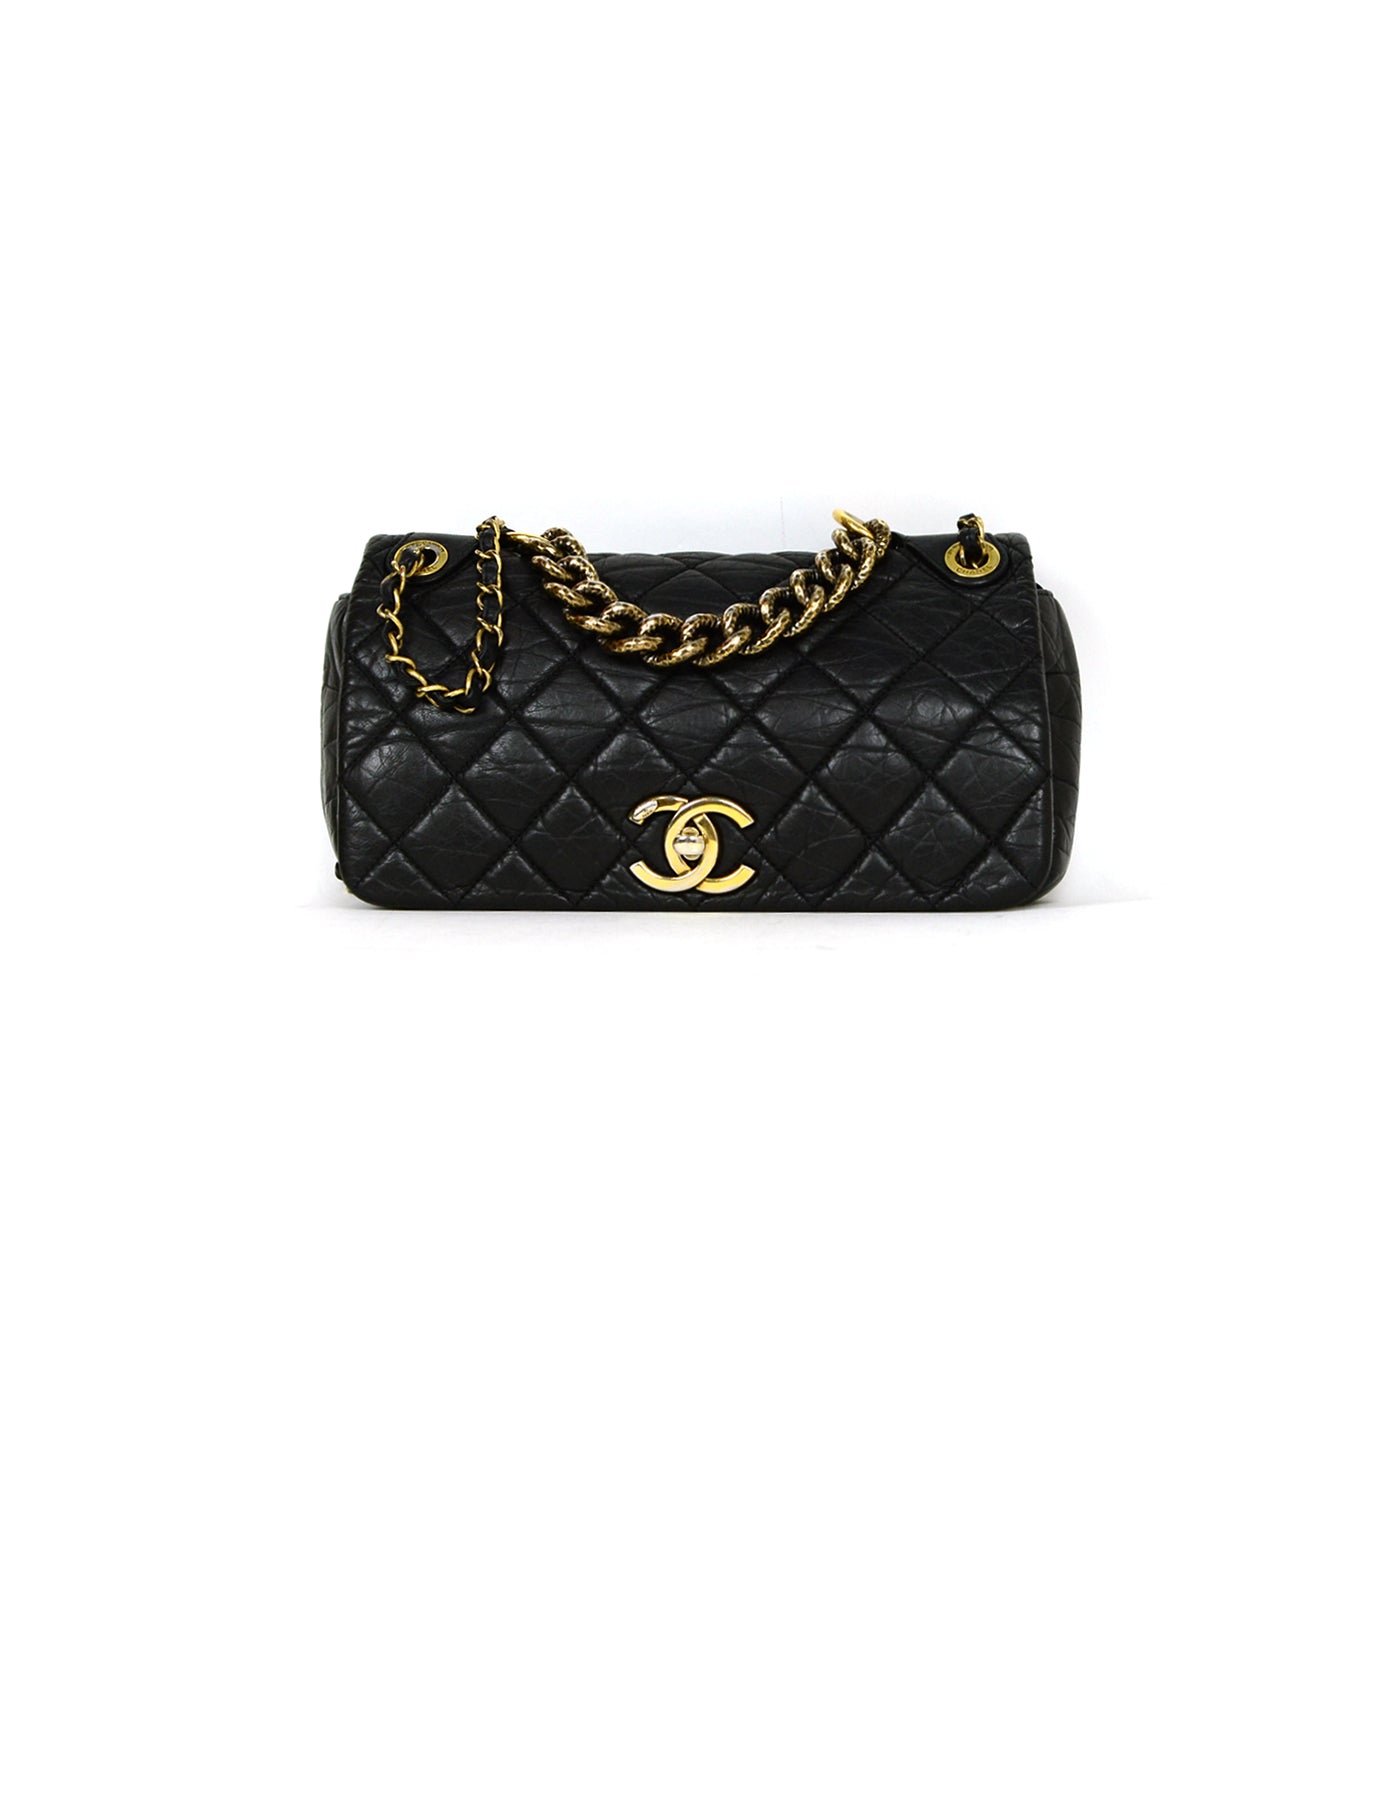 Chanel Black Calfskin Quilted Leather Medium Paris-Bombay Pondichery Flap Bag